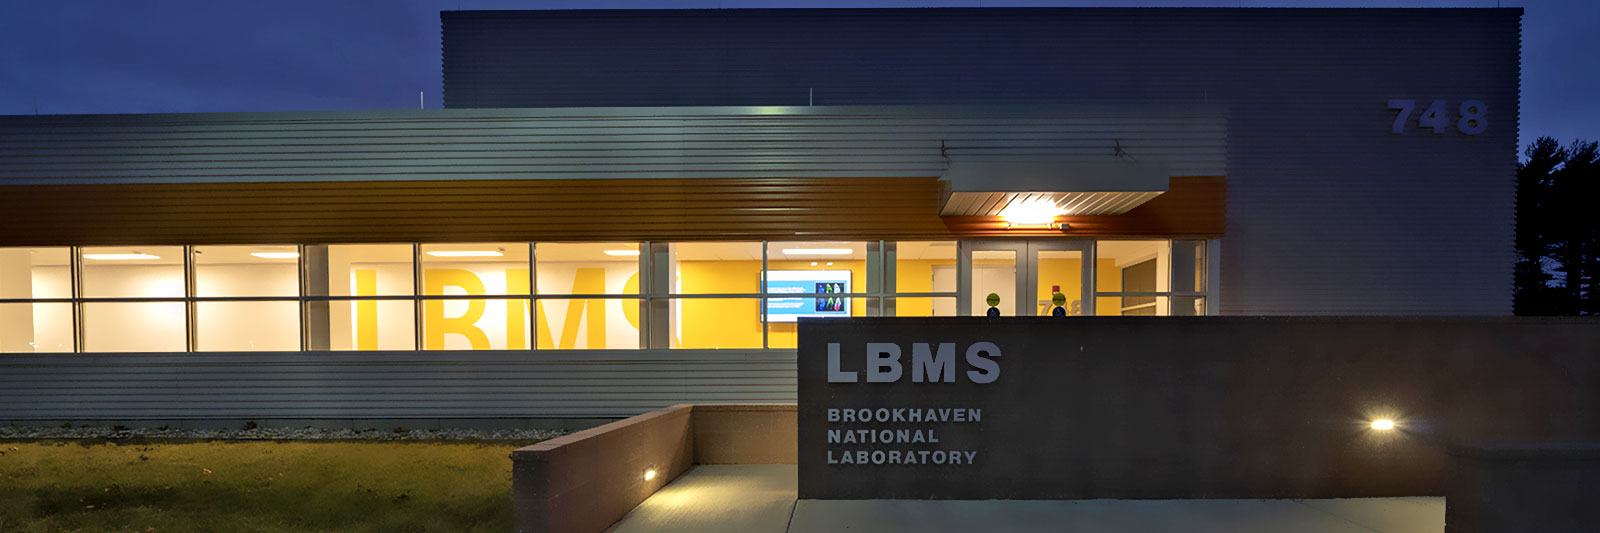 photo of the LBMS facility